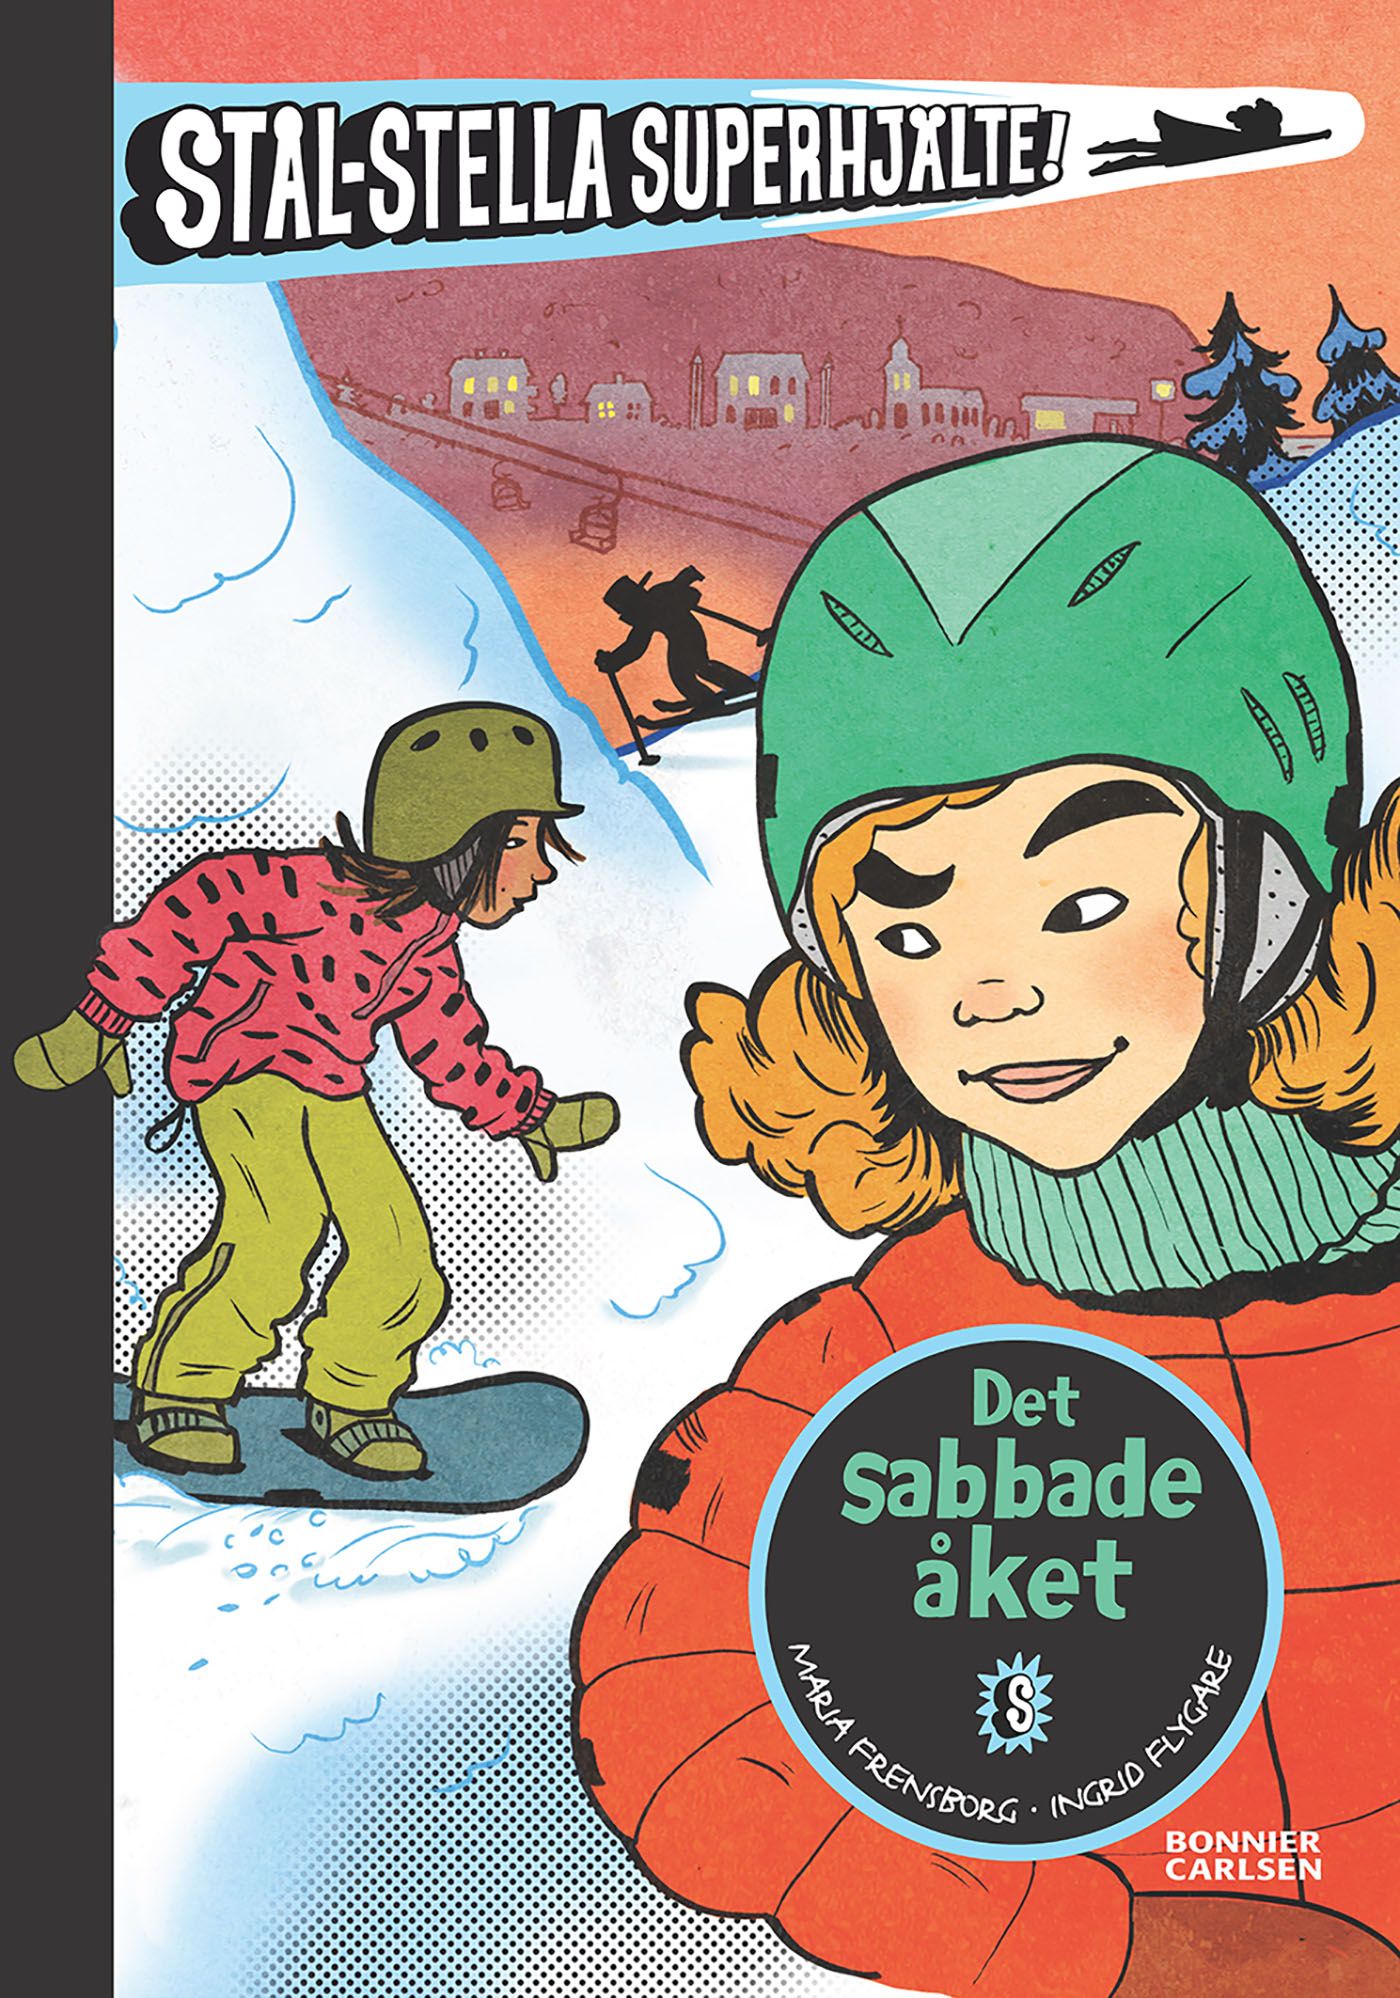 Det sabbade åket, eBook by Maria Frensborg